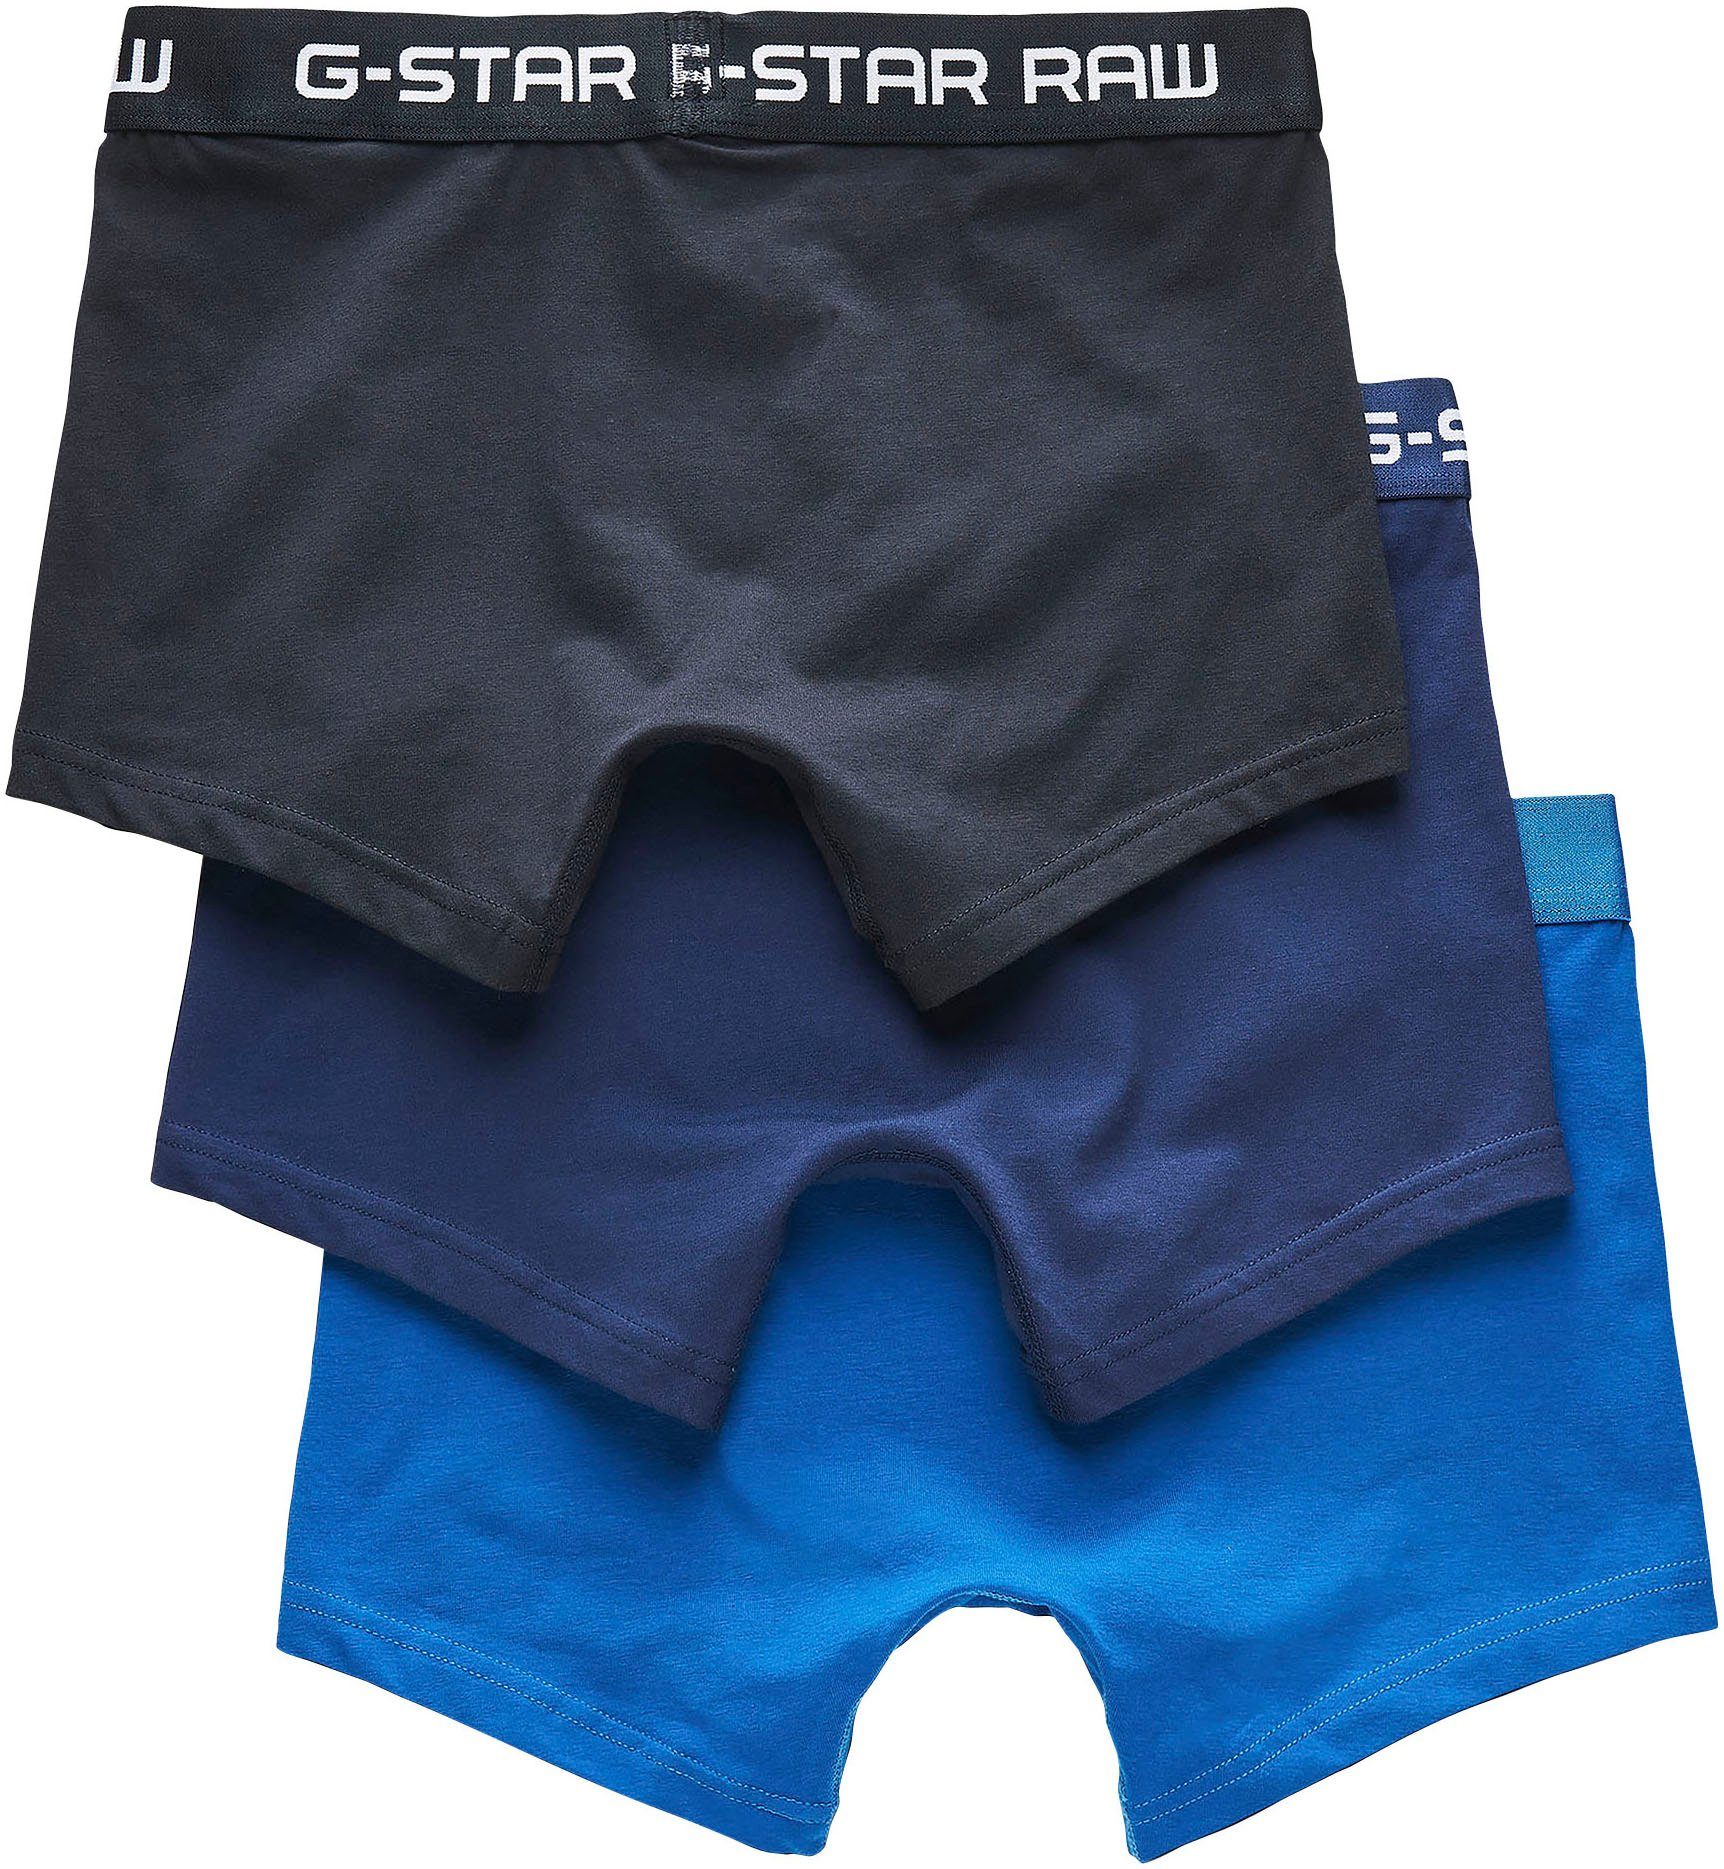 RAW Boxer blau, aquablau, Classic trunk 3er-Pack) G-Star (Packung, pack clr marine 3 3-St.,